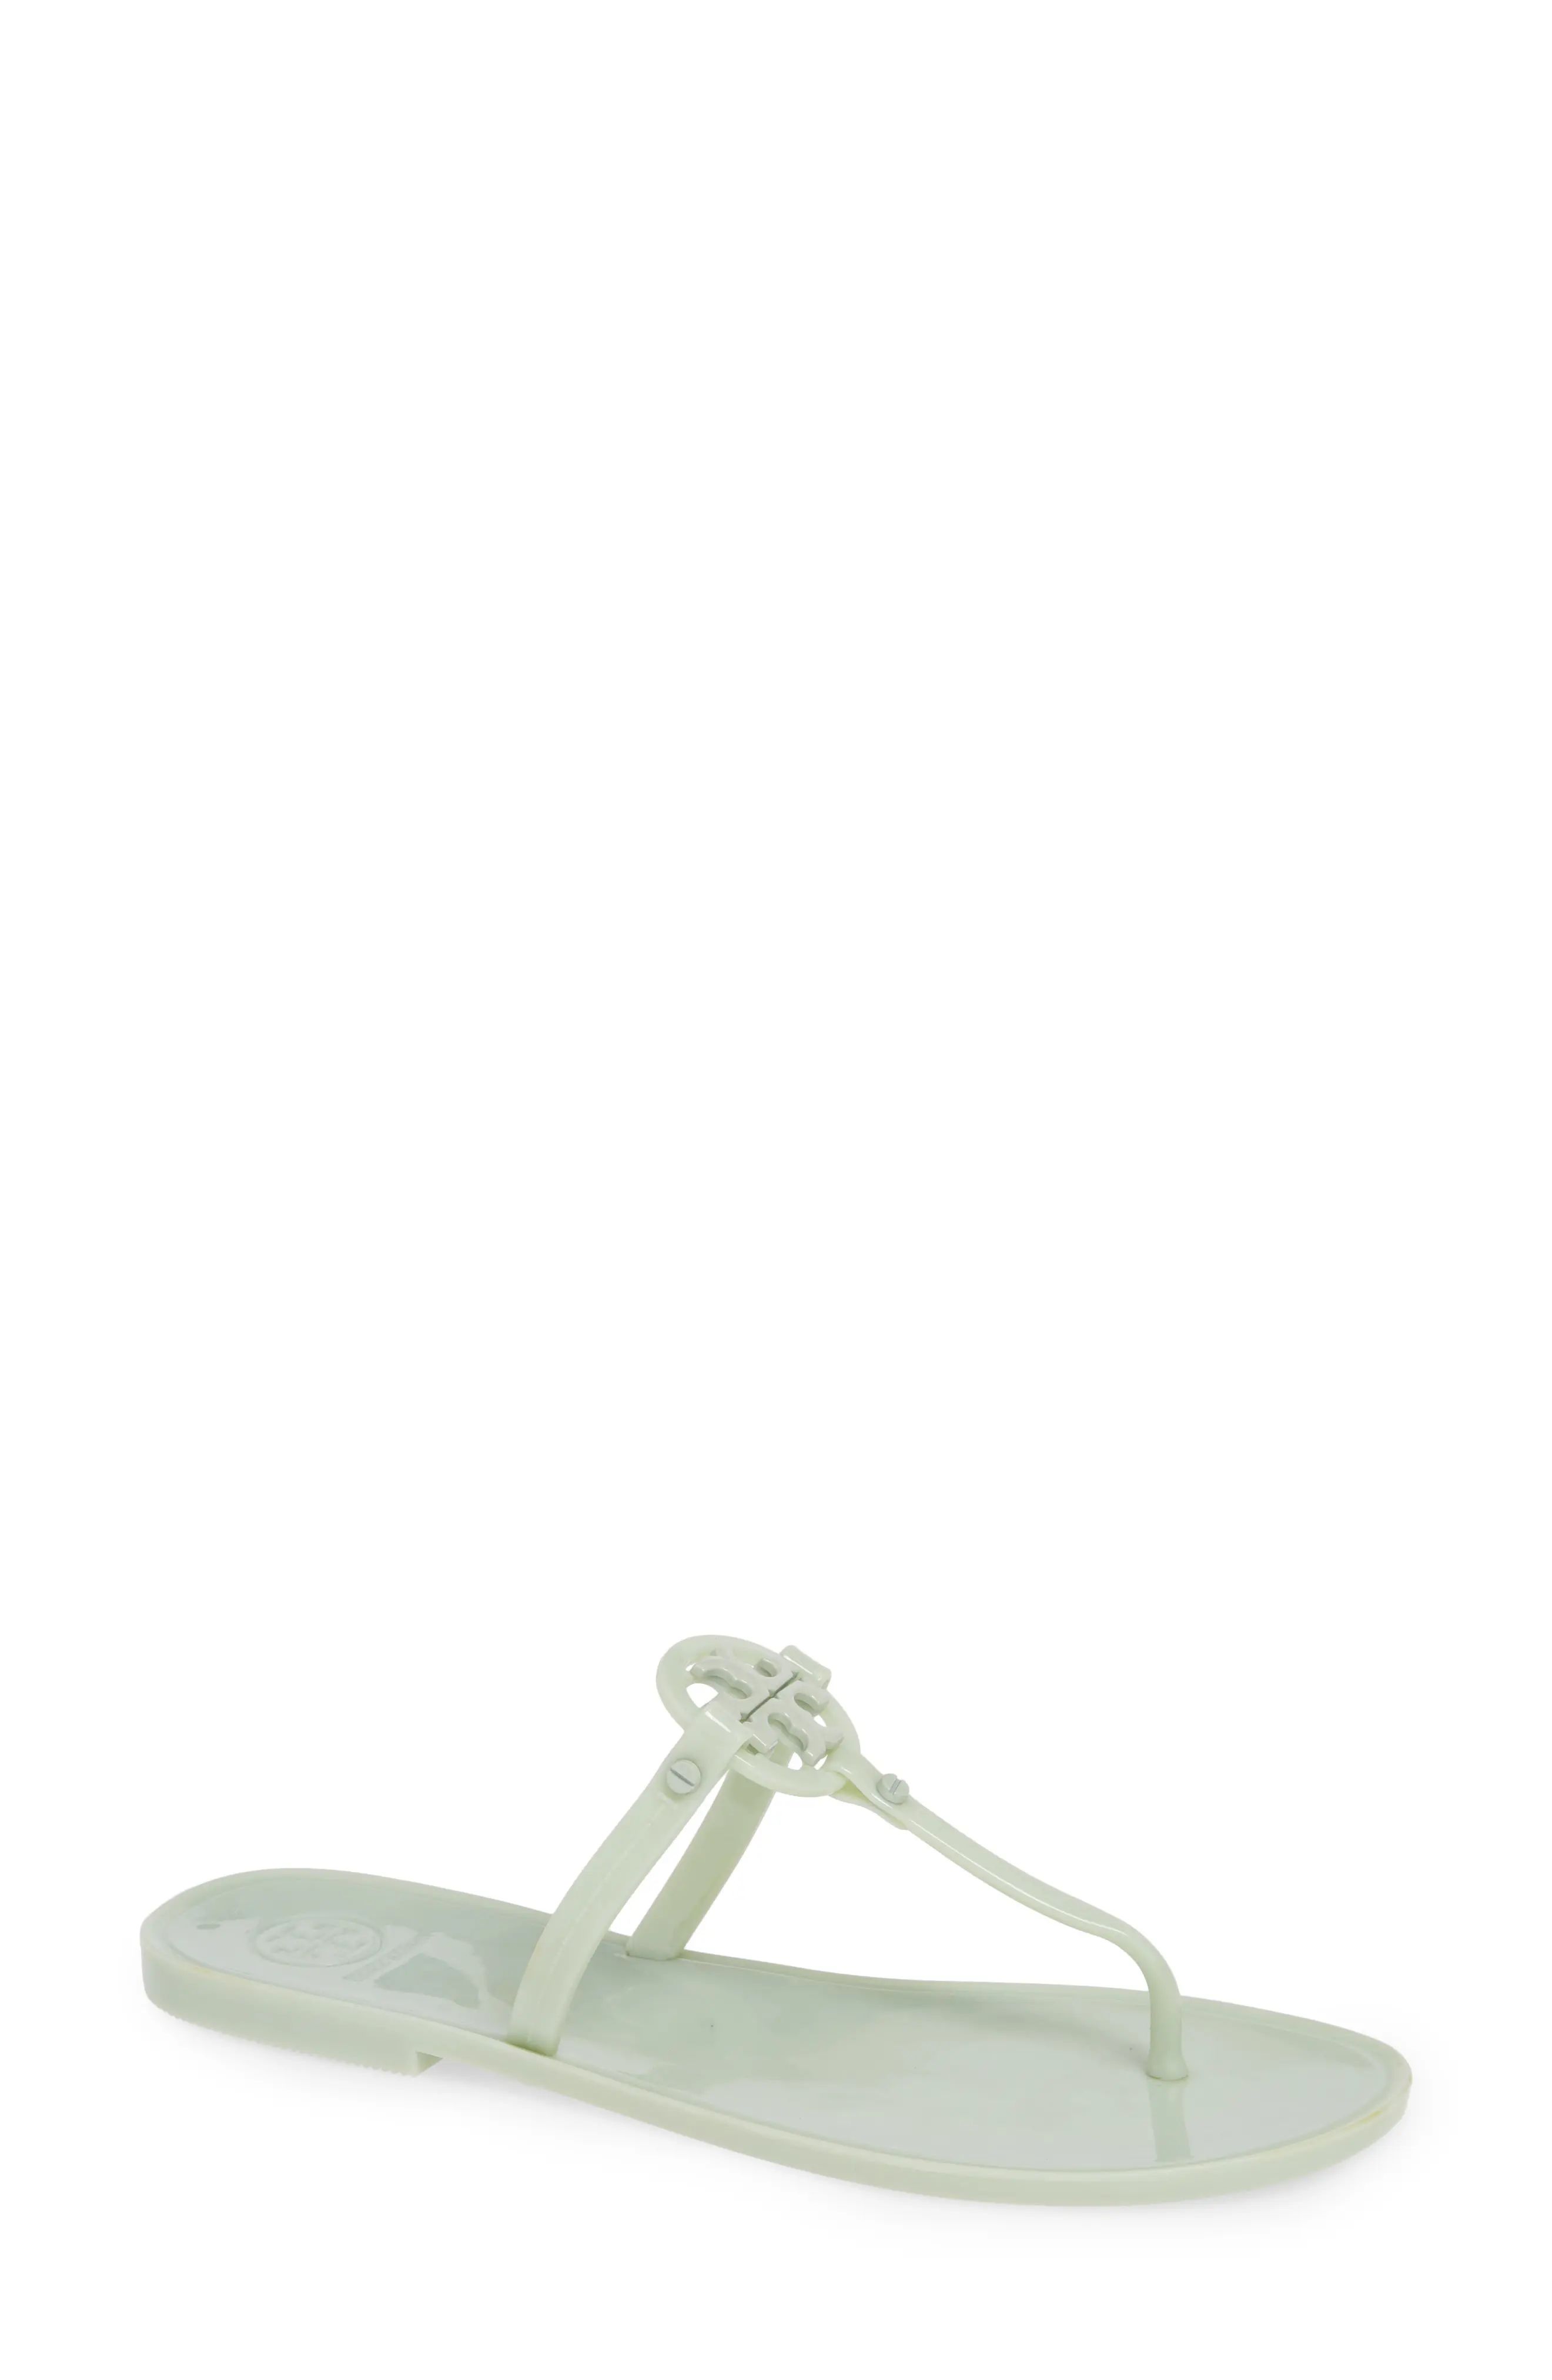 Women's Tory Burch 'Mini Miller' Flat Sandal, Size 5 M - Blue/green | Nordstrom